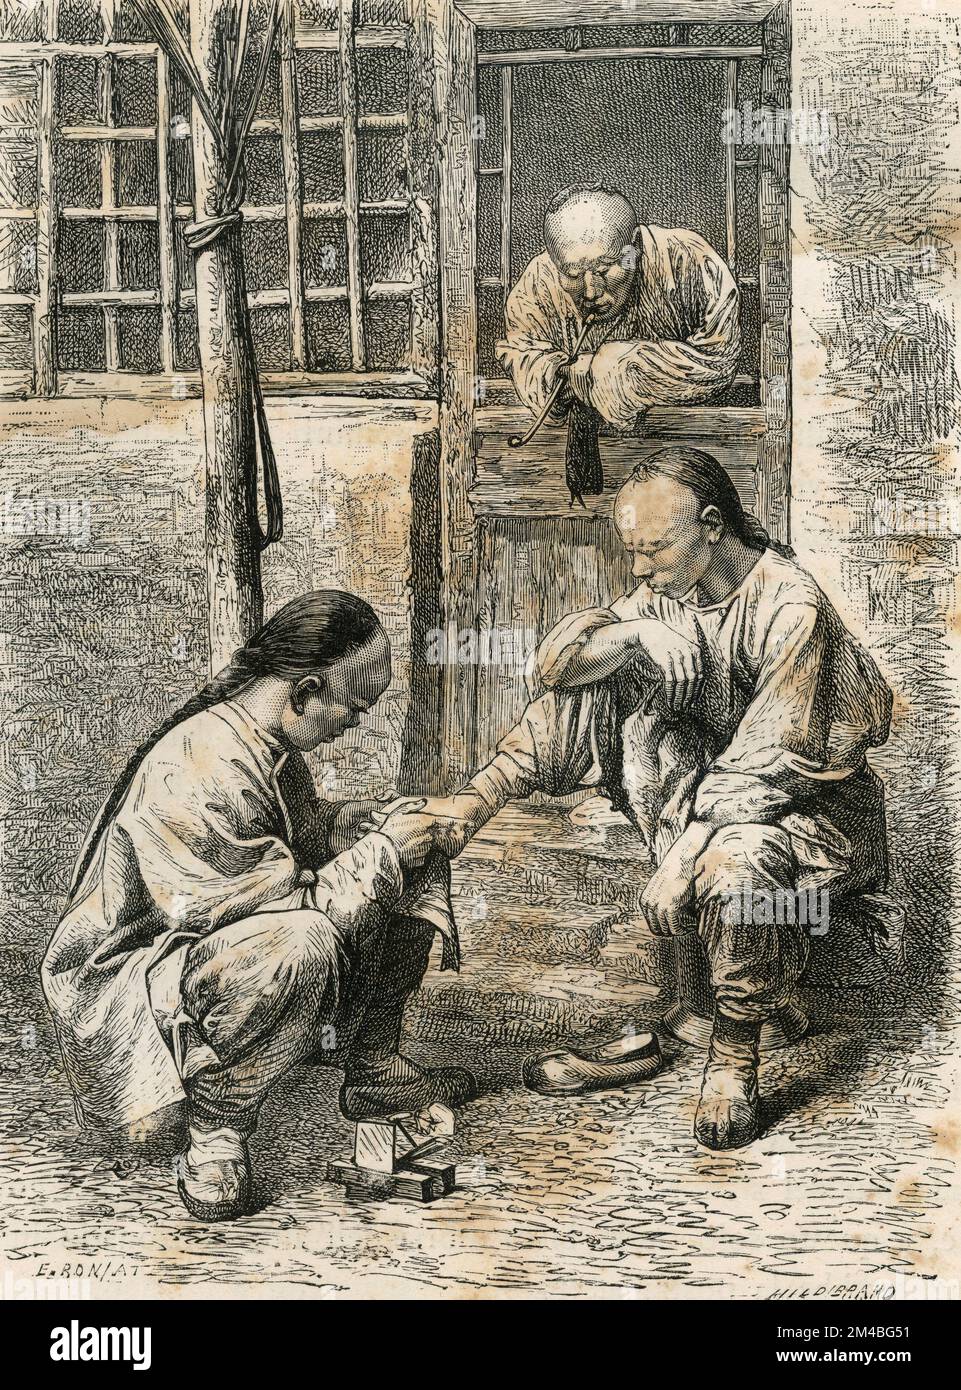 Itinerant callist, China, illustration 1860s Stock Photo